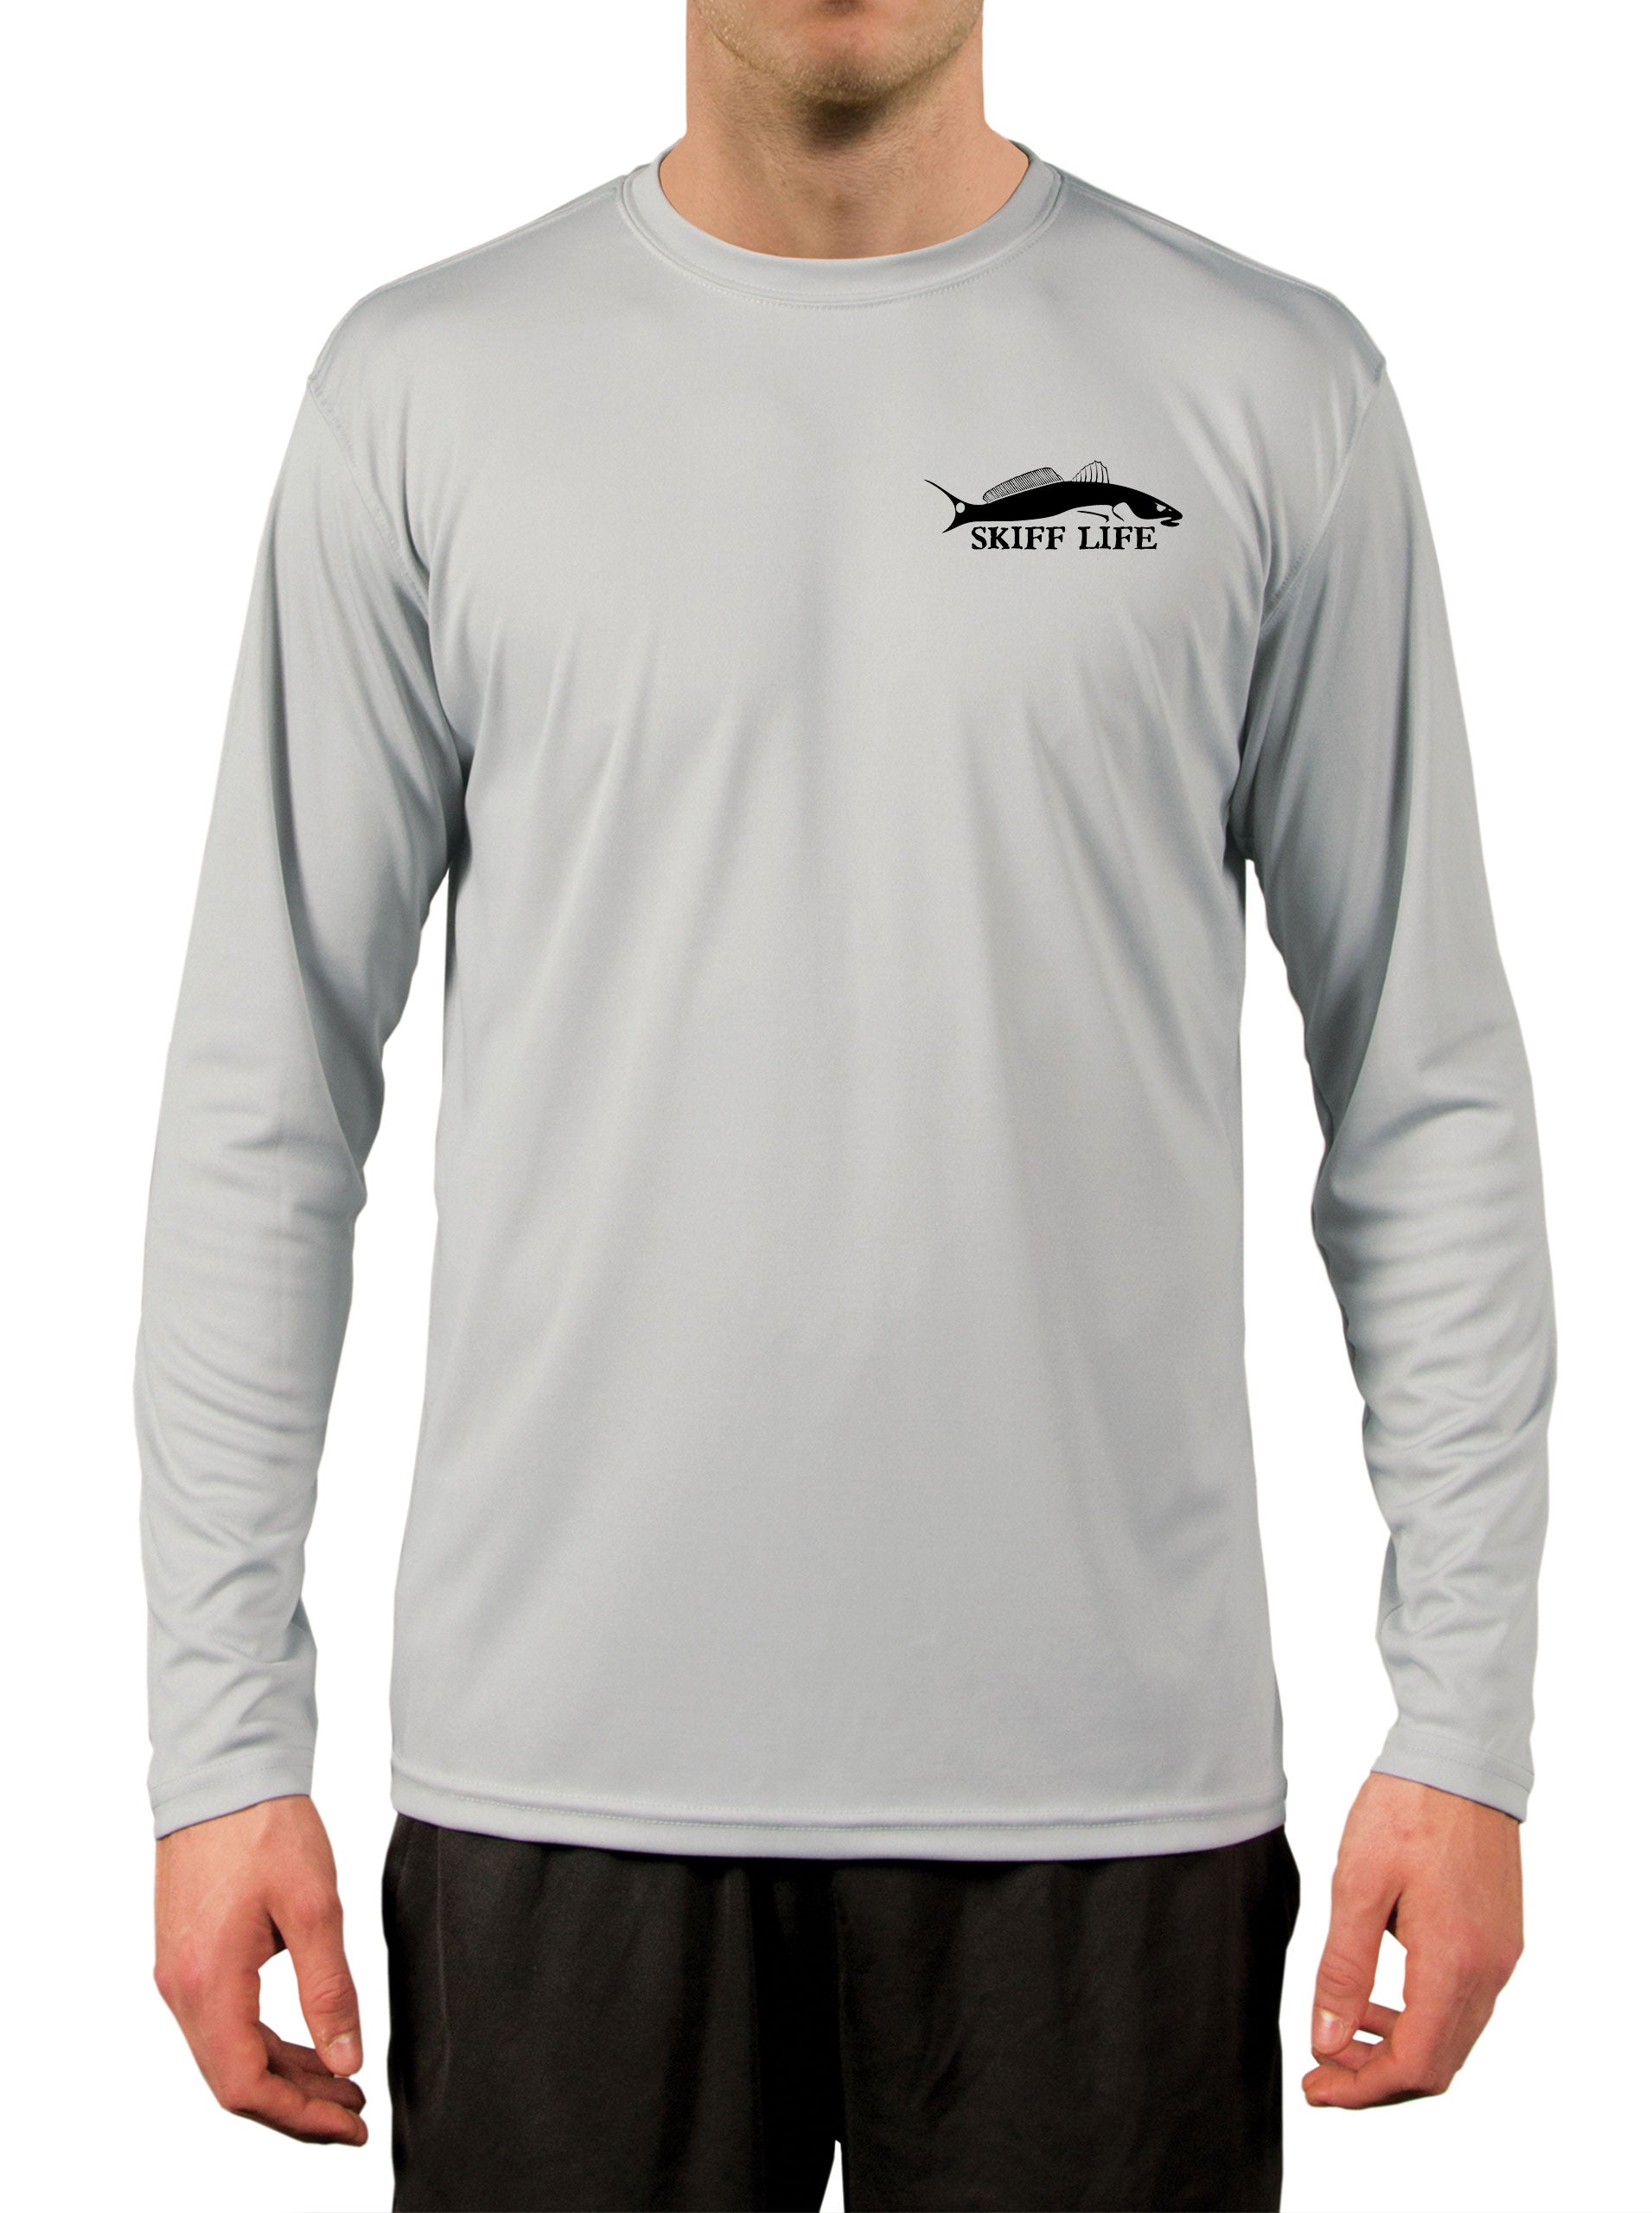 Habit Shirt Large Mens Solar Factor Fishing Vented Long-Sleeve Grey  Lightweight 